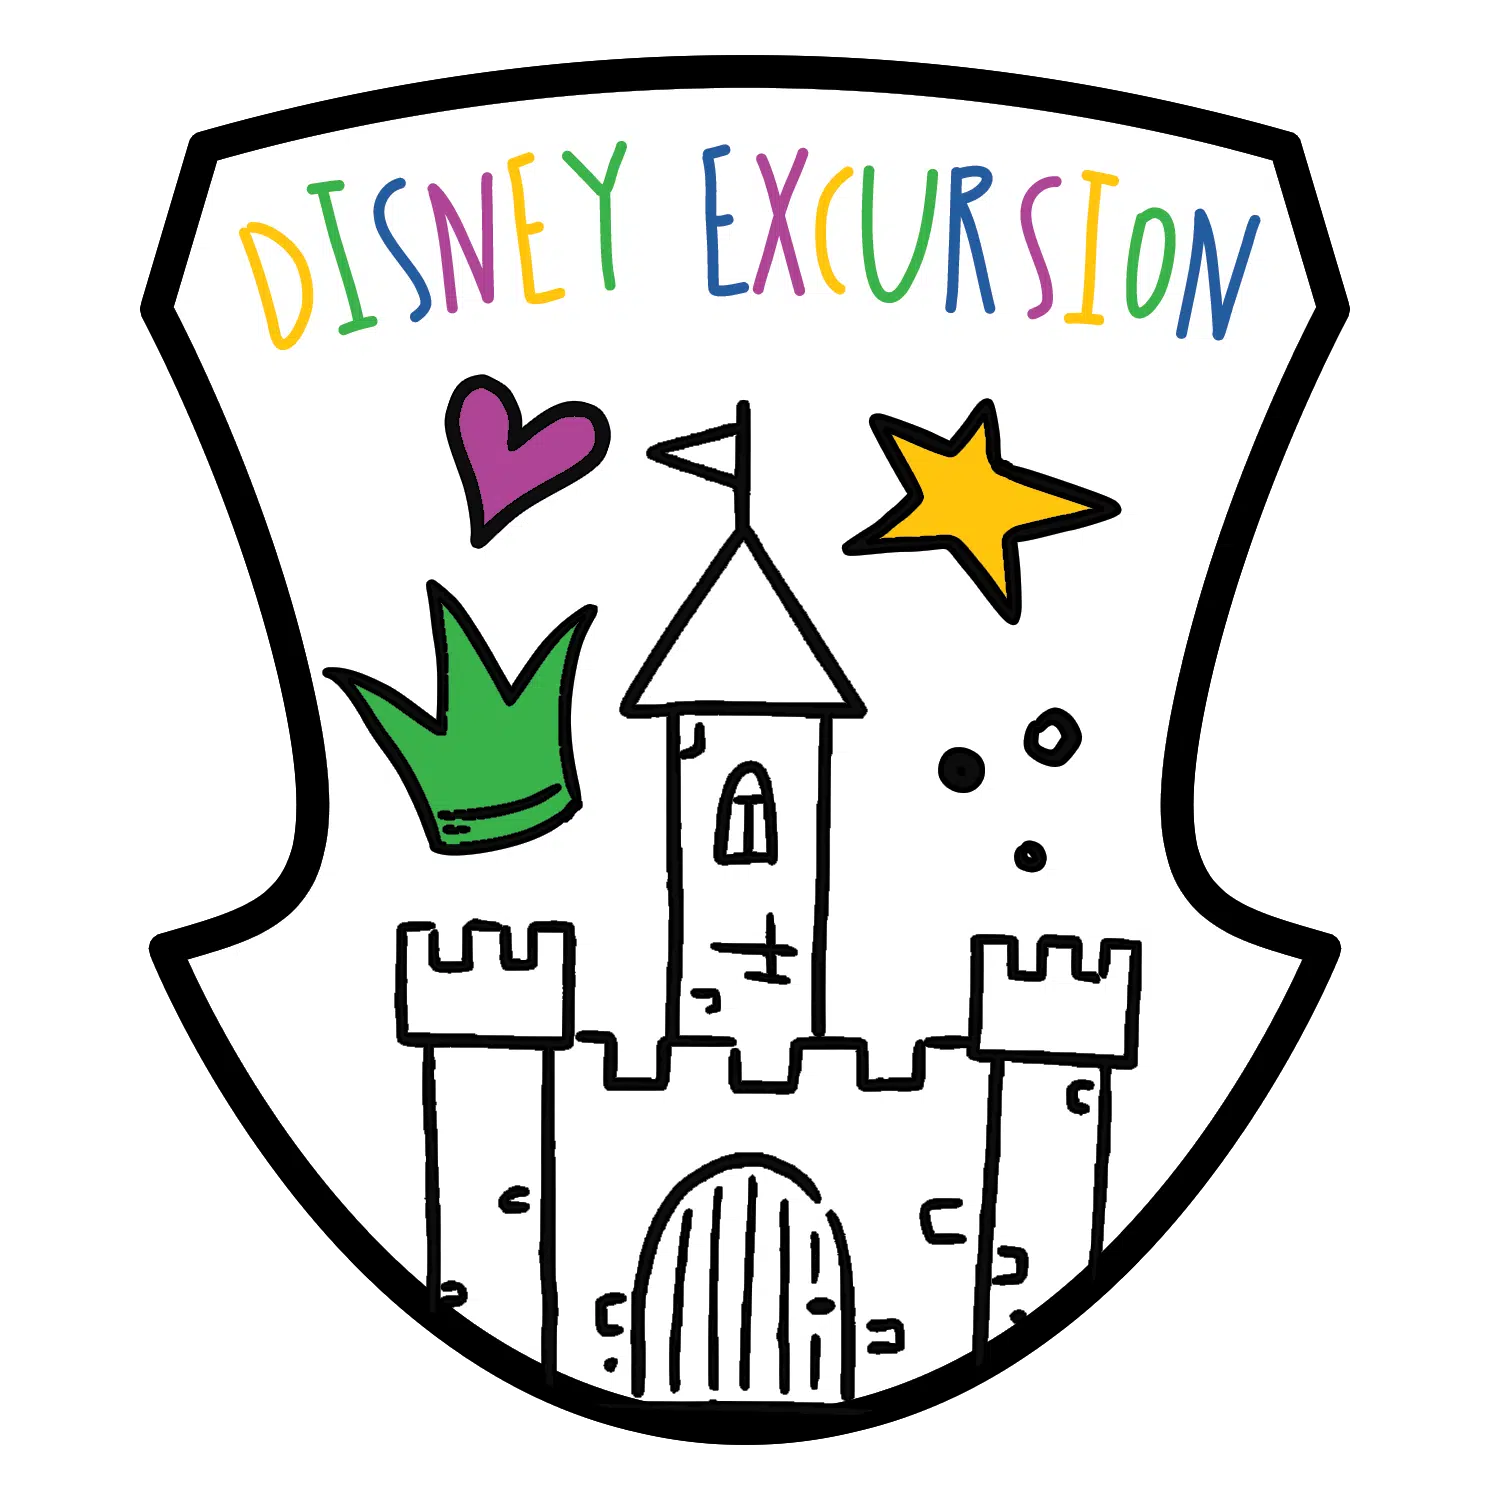 Disney Excursion*